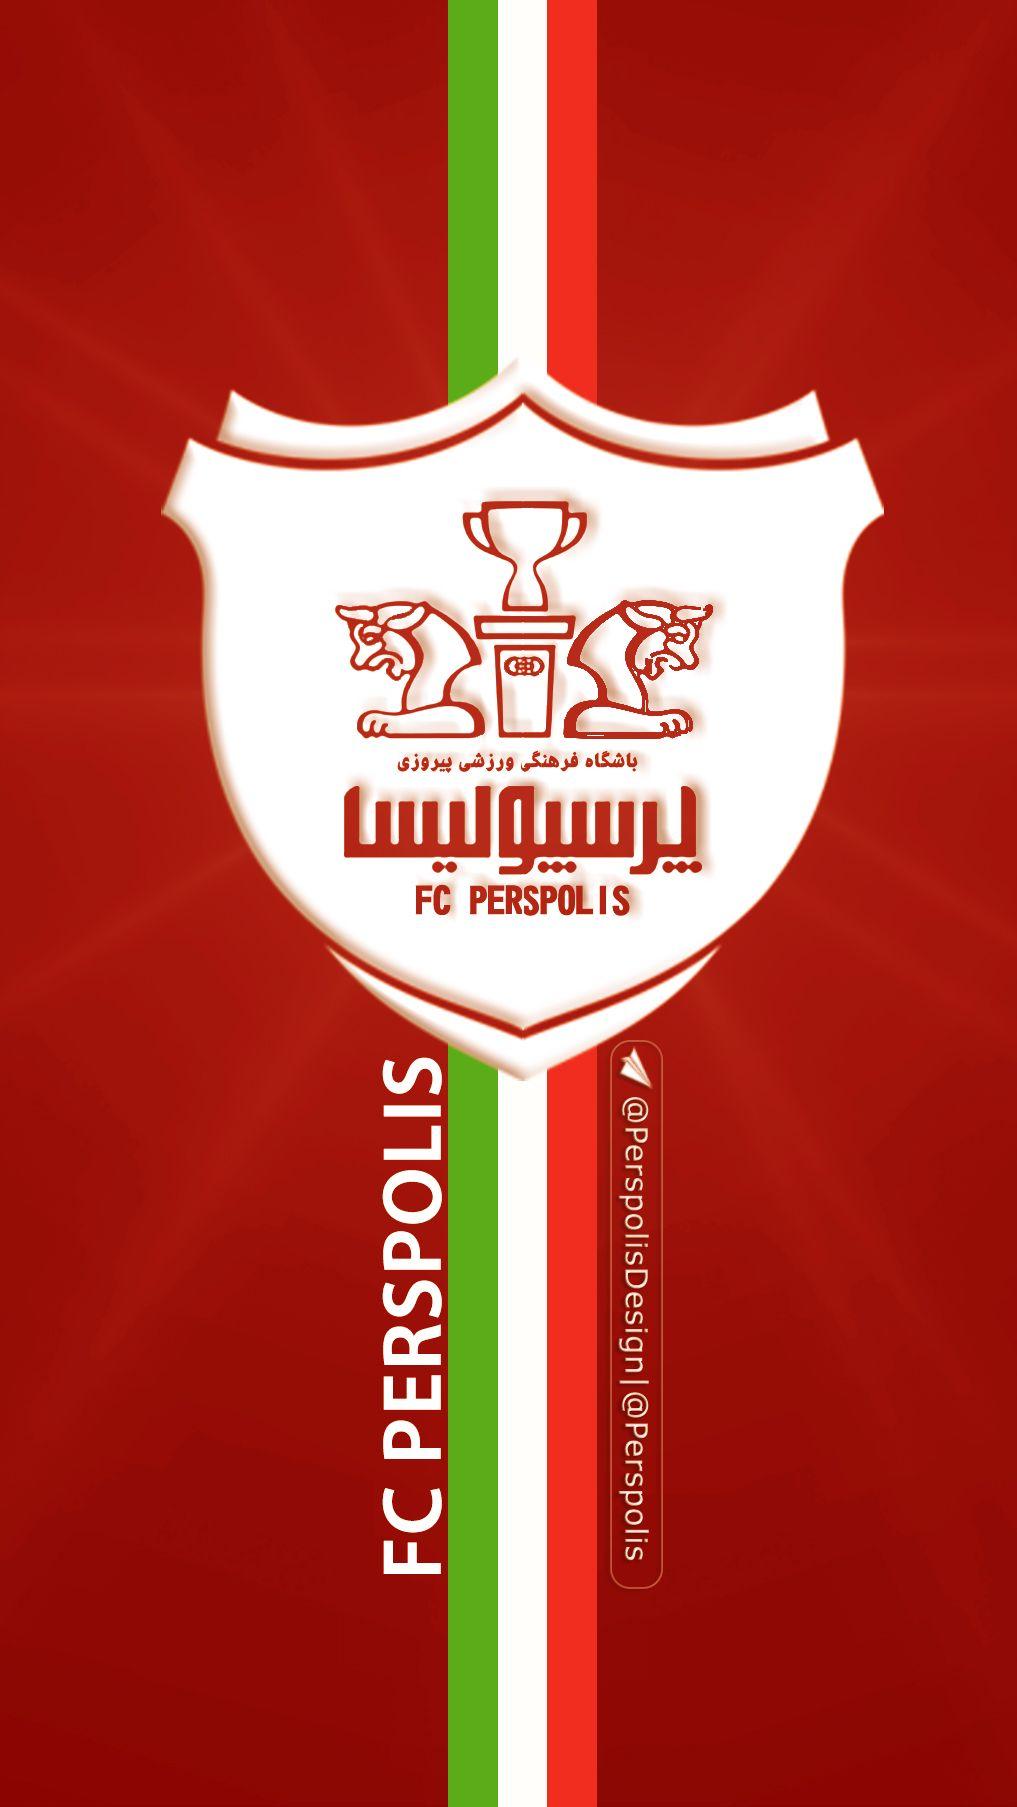 Persepolis FC Wallpapers - Top Free Persepolis FC Backgrounds ...